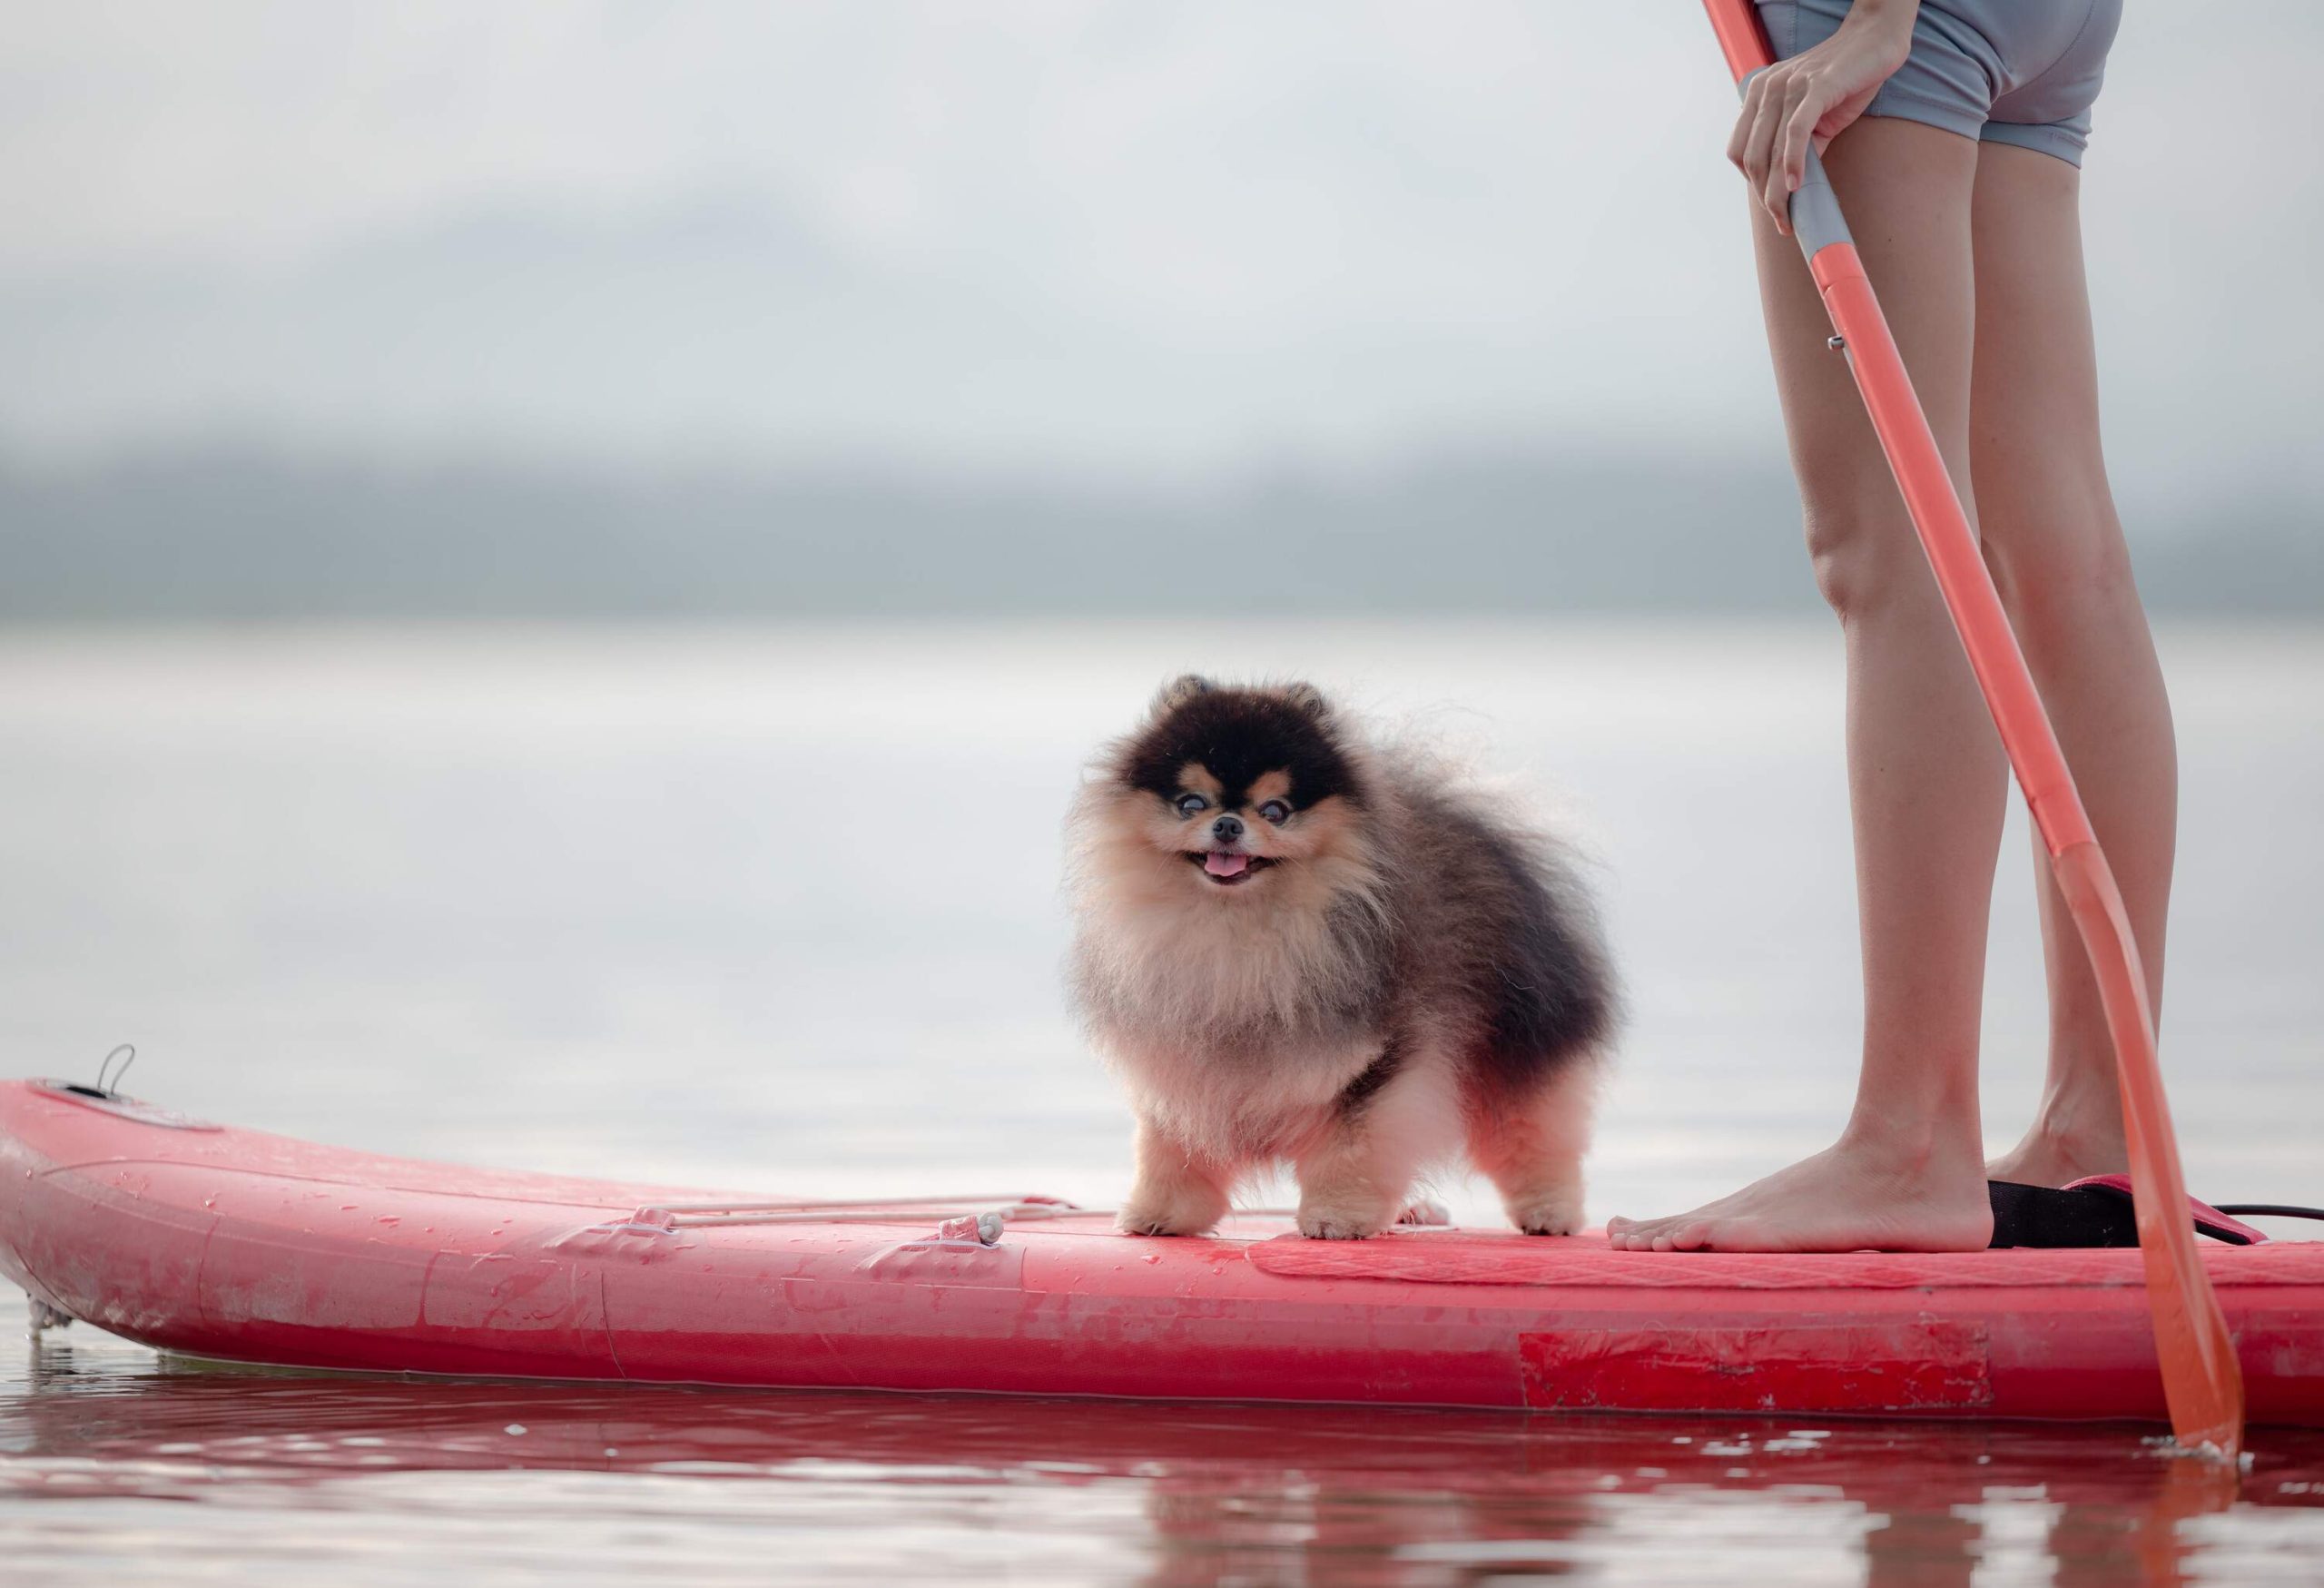 Puppy dog stay stready sitting on sub standing board, enjoy aquar sport together with owner